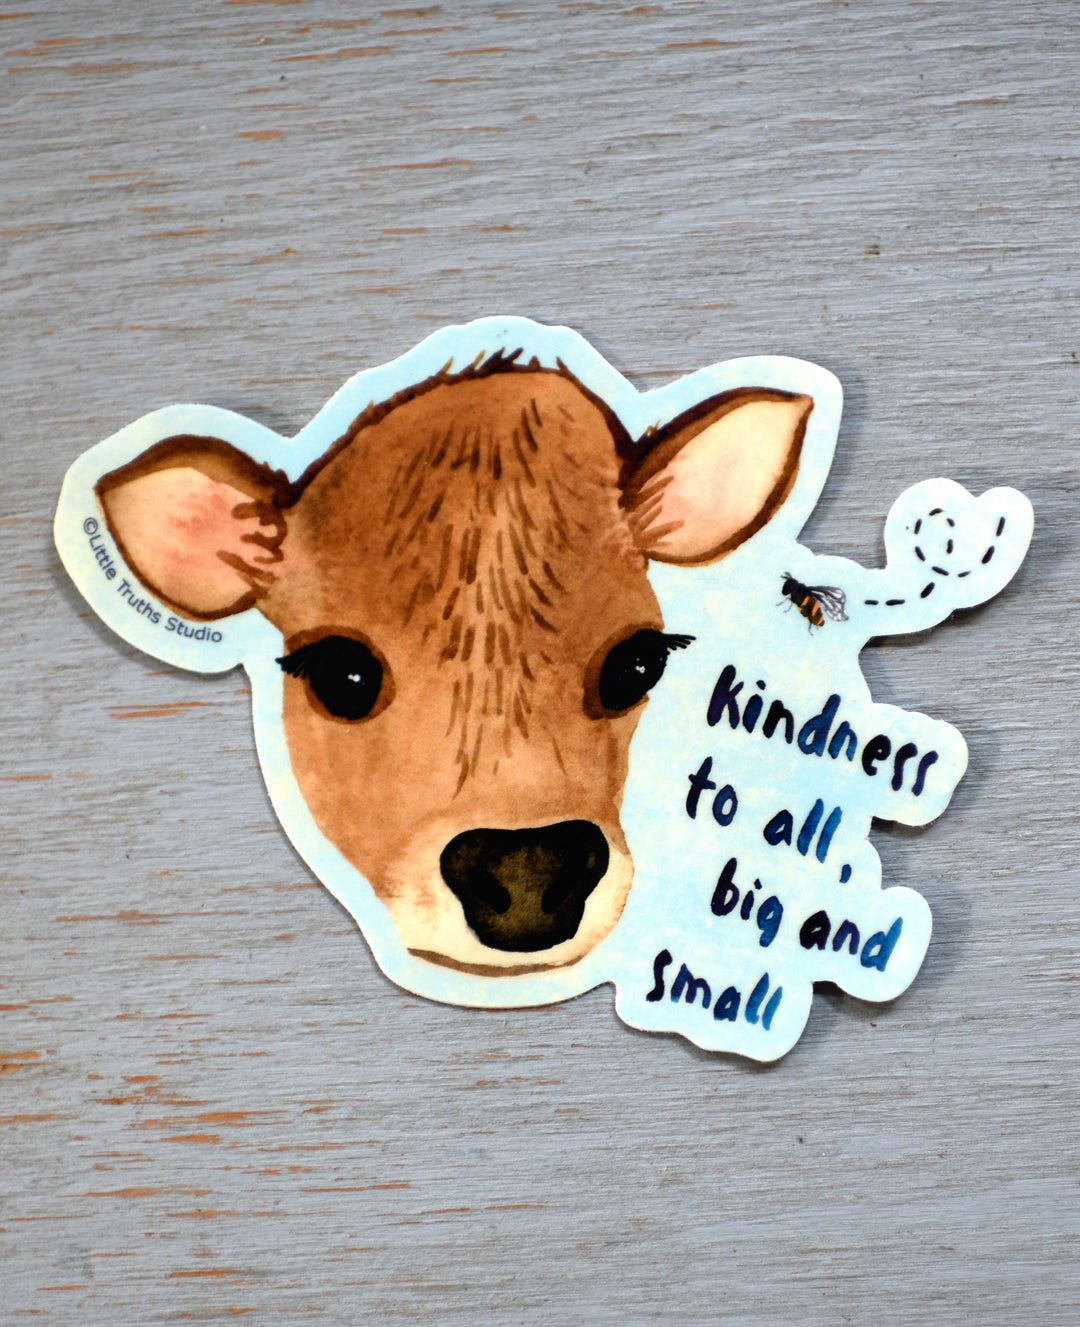 Kindness To All, Big & Small Vinyl Sticker Little Truths Studio 